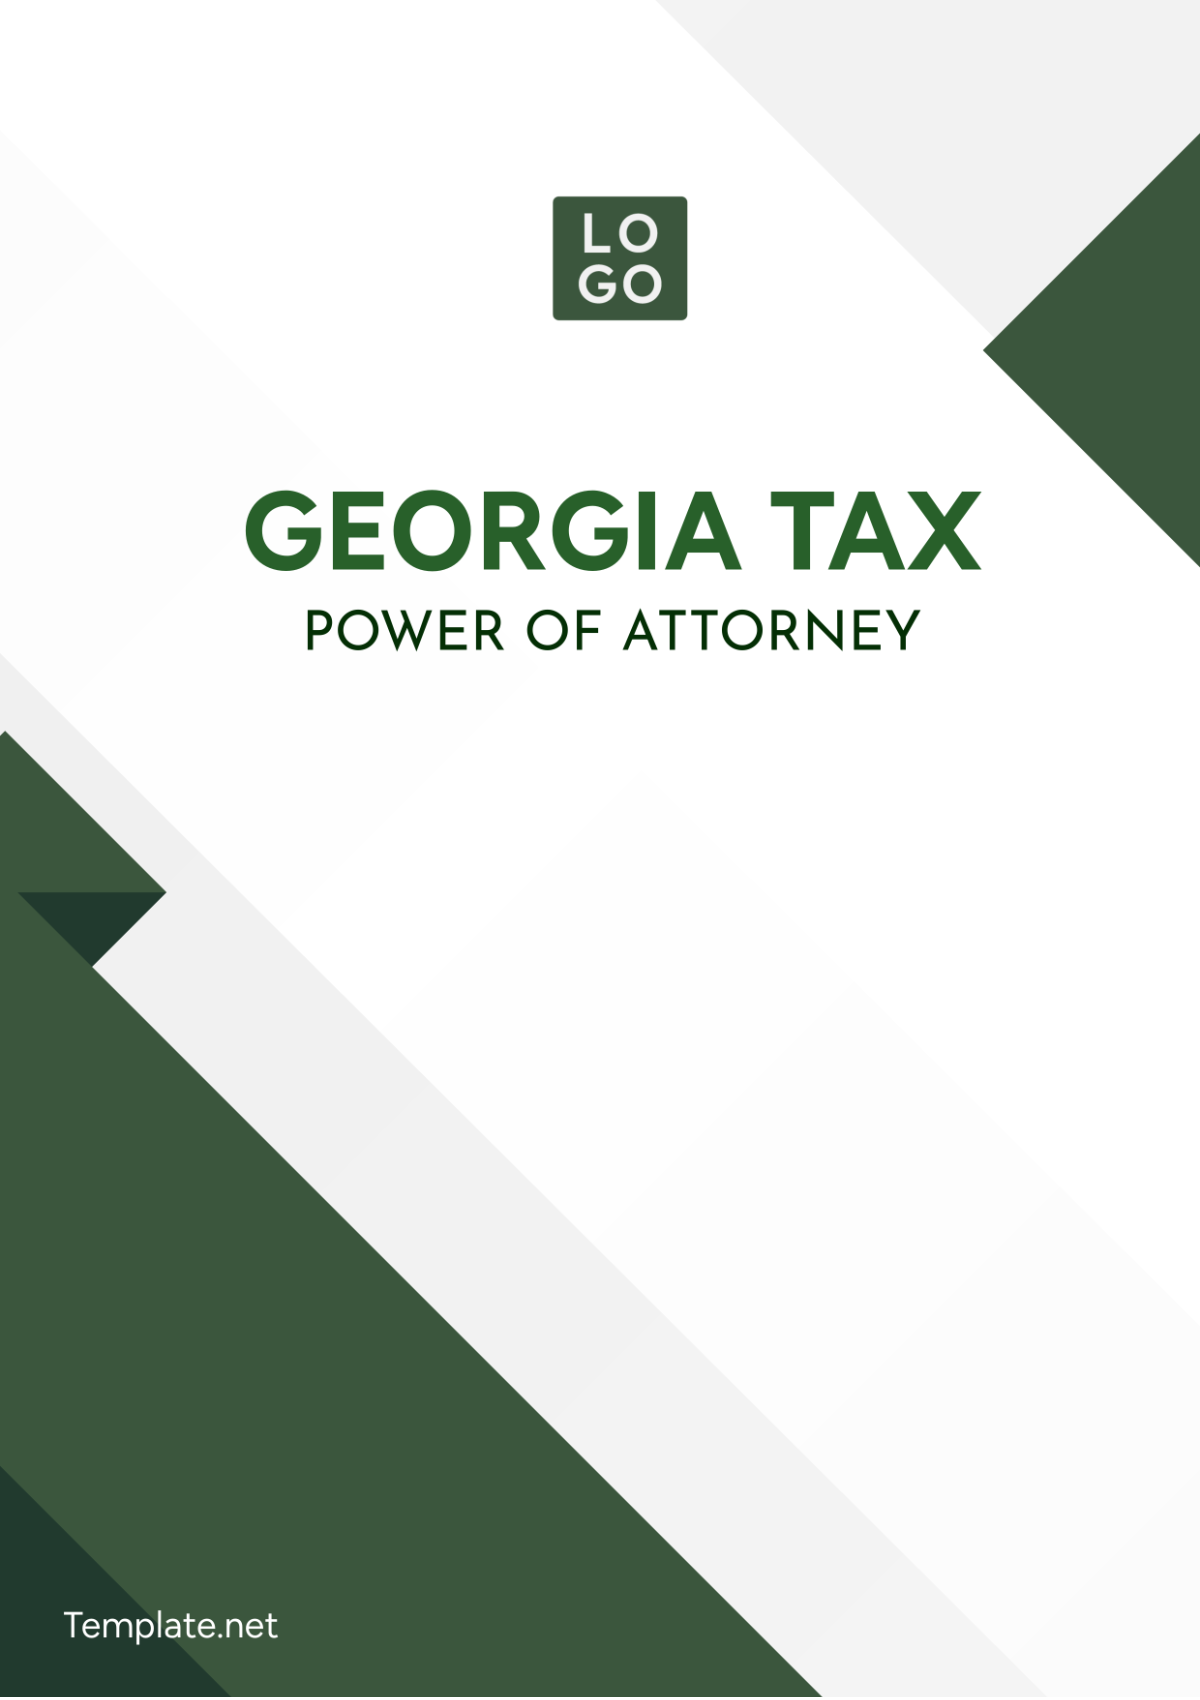 Georgia Tax Power of Attorney Template